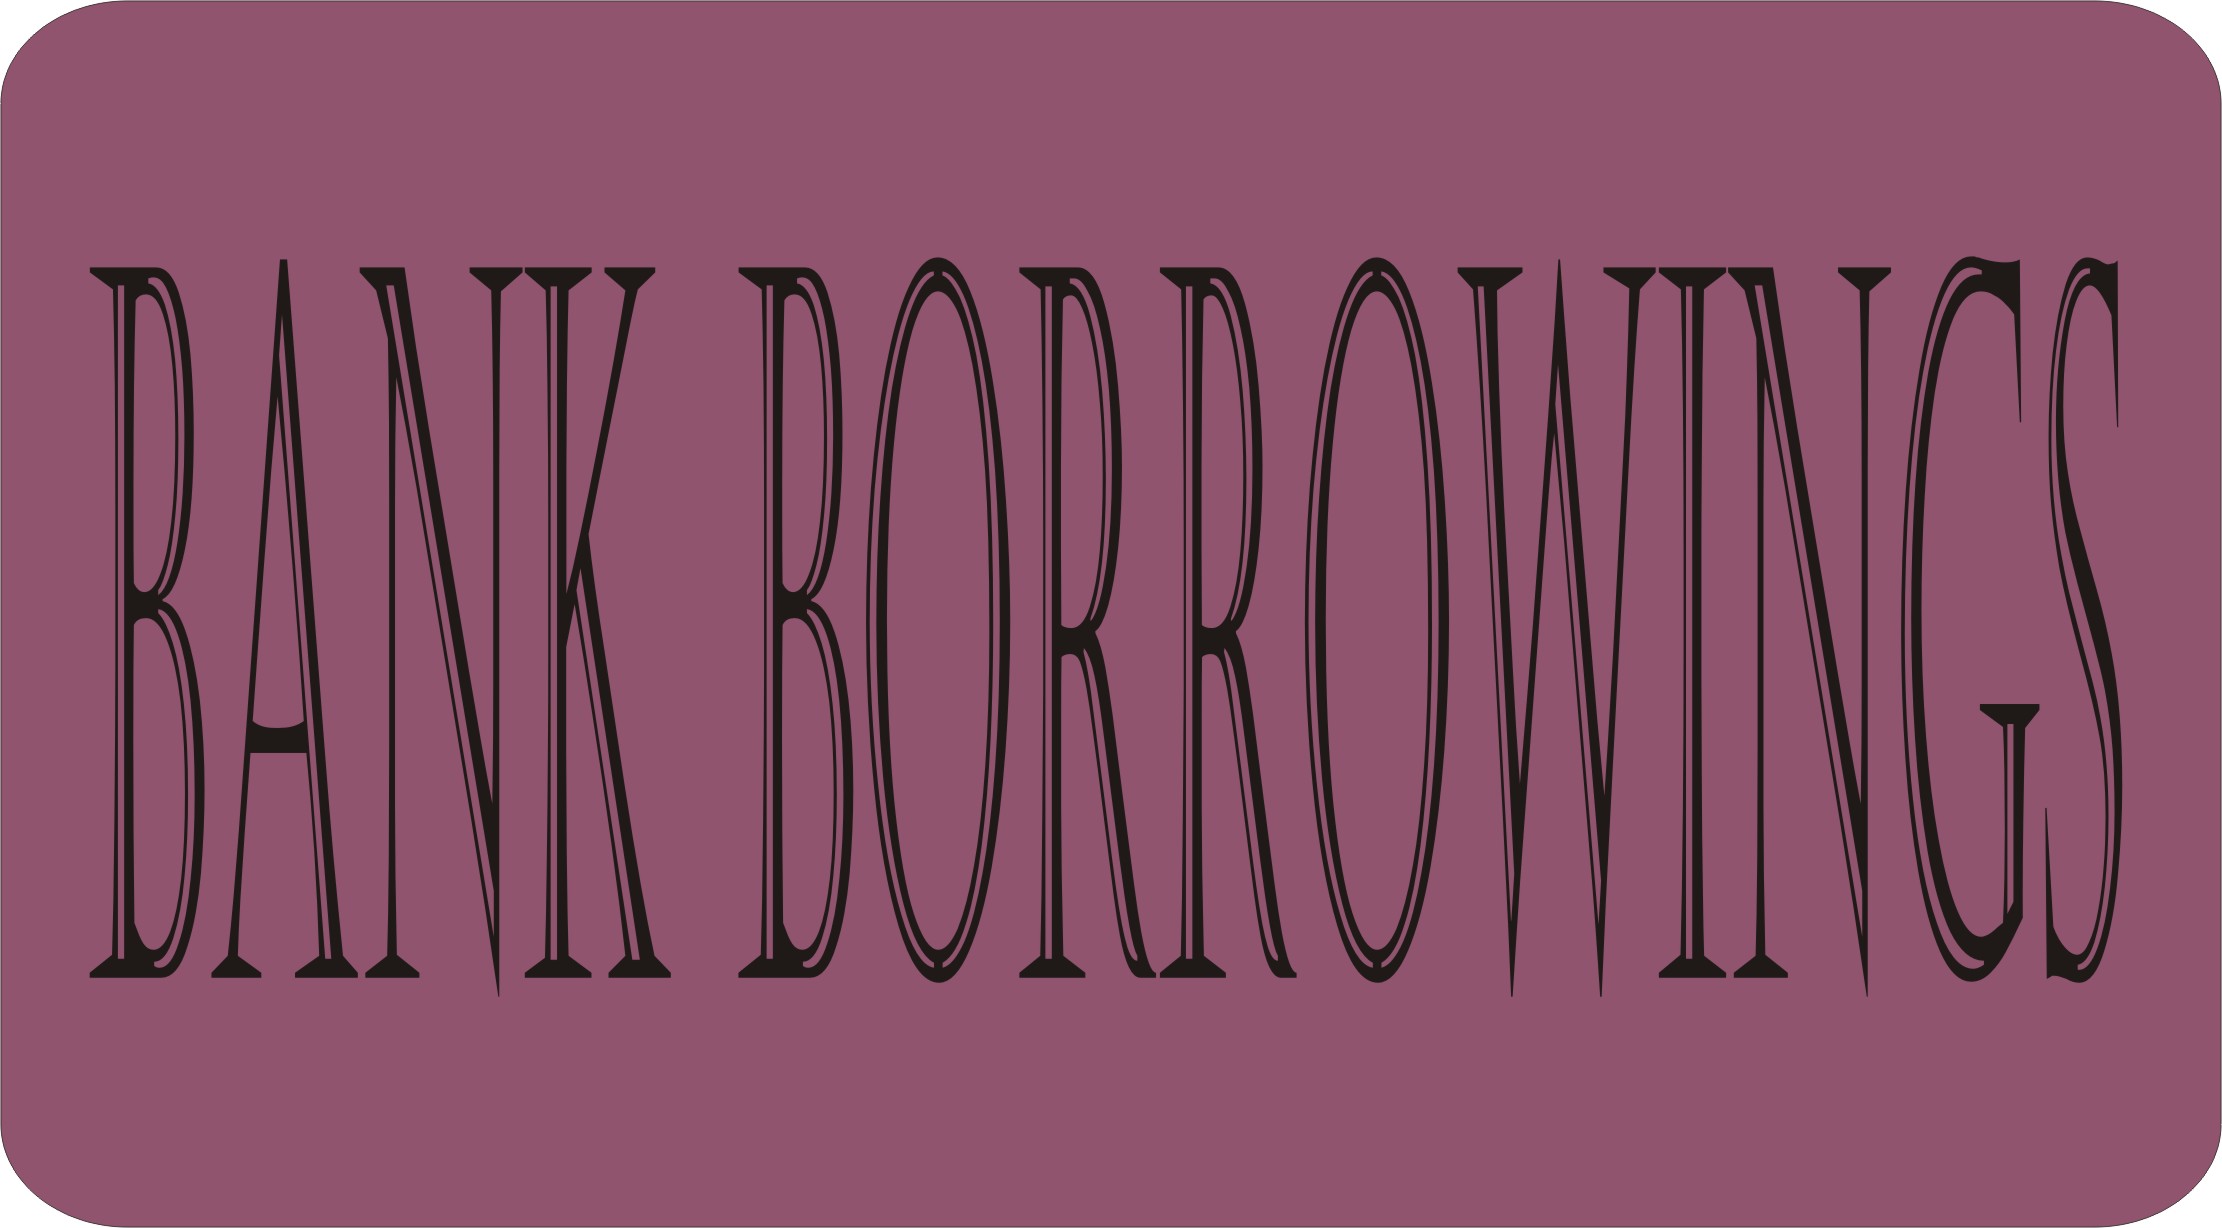 Bank Borrowings